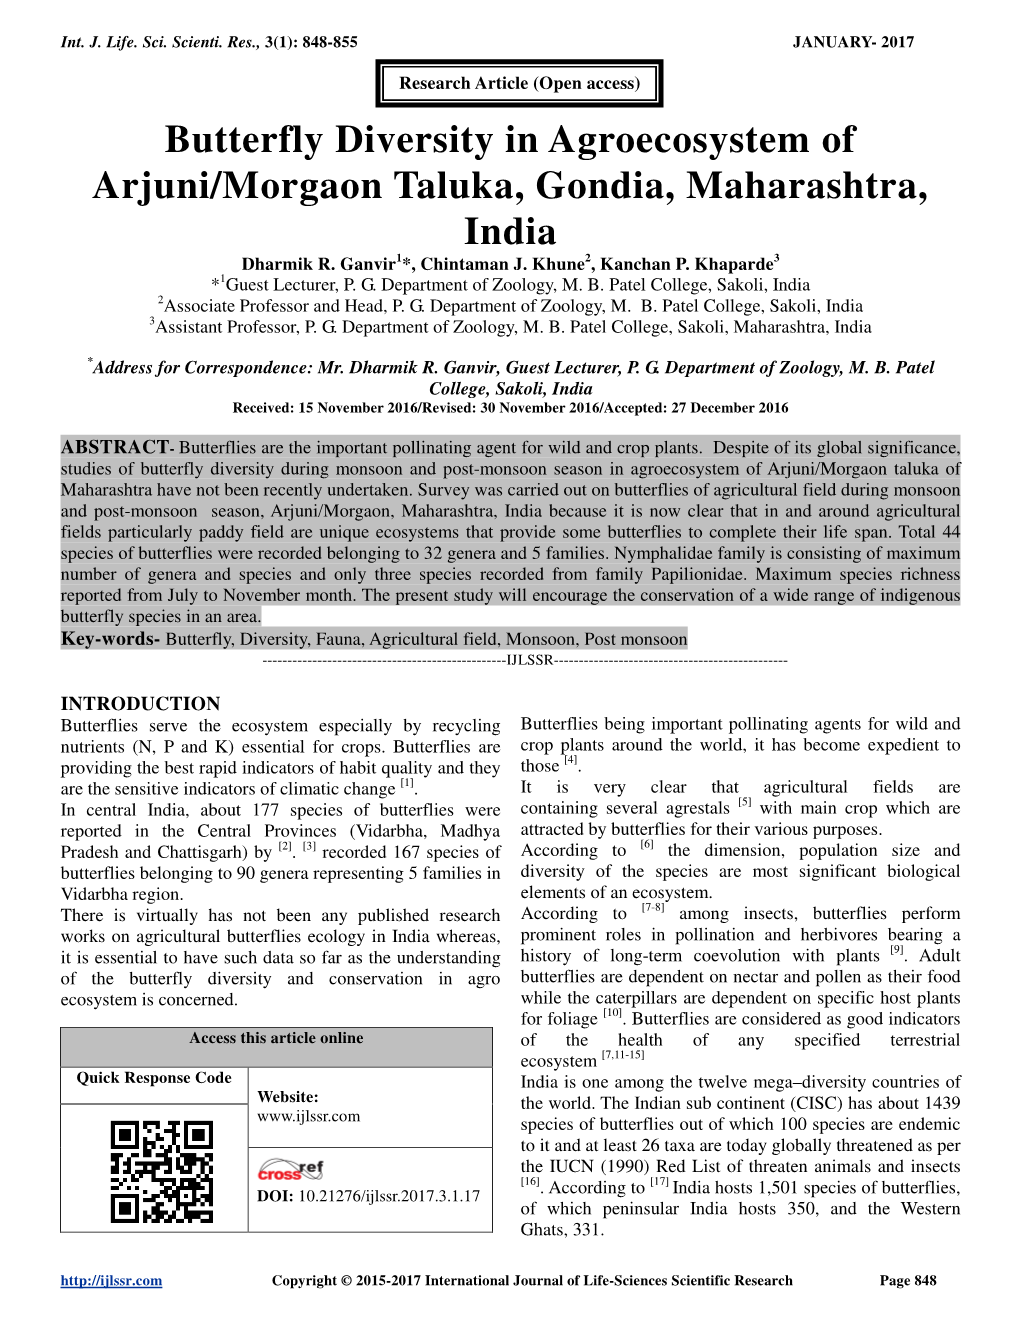 Butterfly Diversity in Agroecosystem of Arjuni/Morgaon Taluka, Gondia, Maharashtra, India Dharmik R